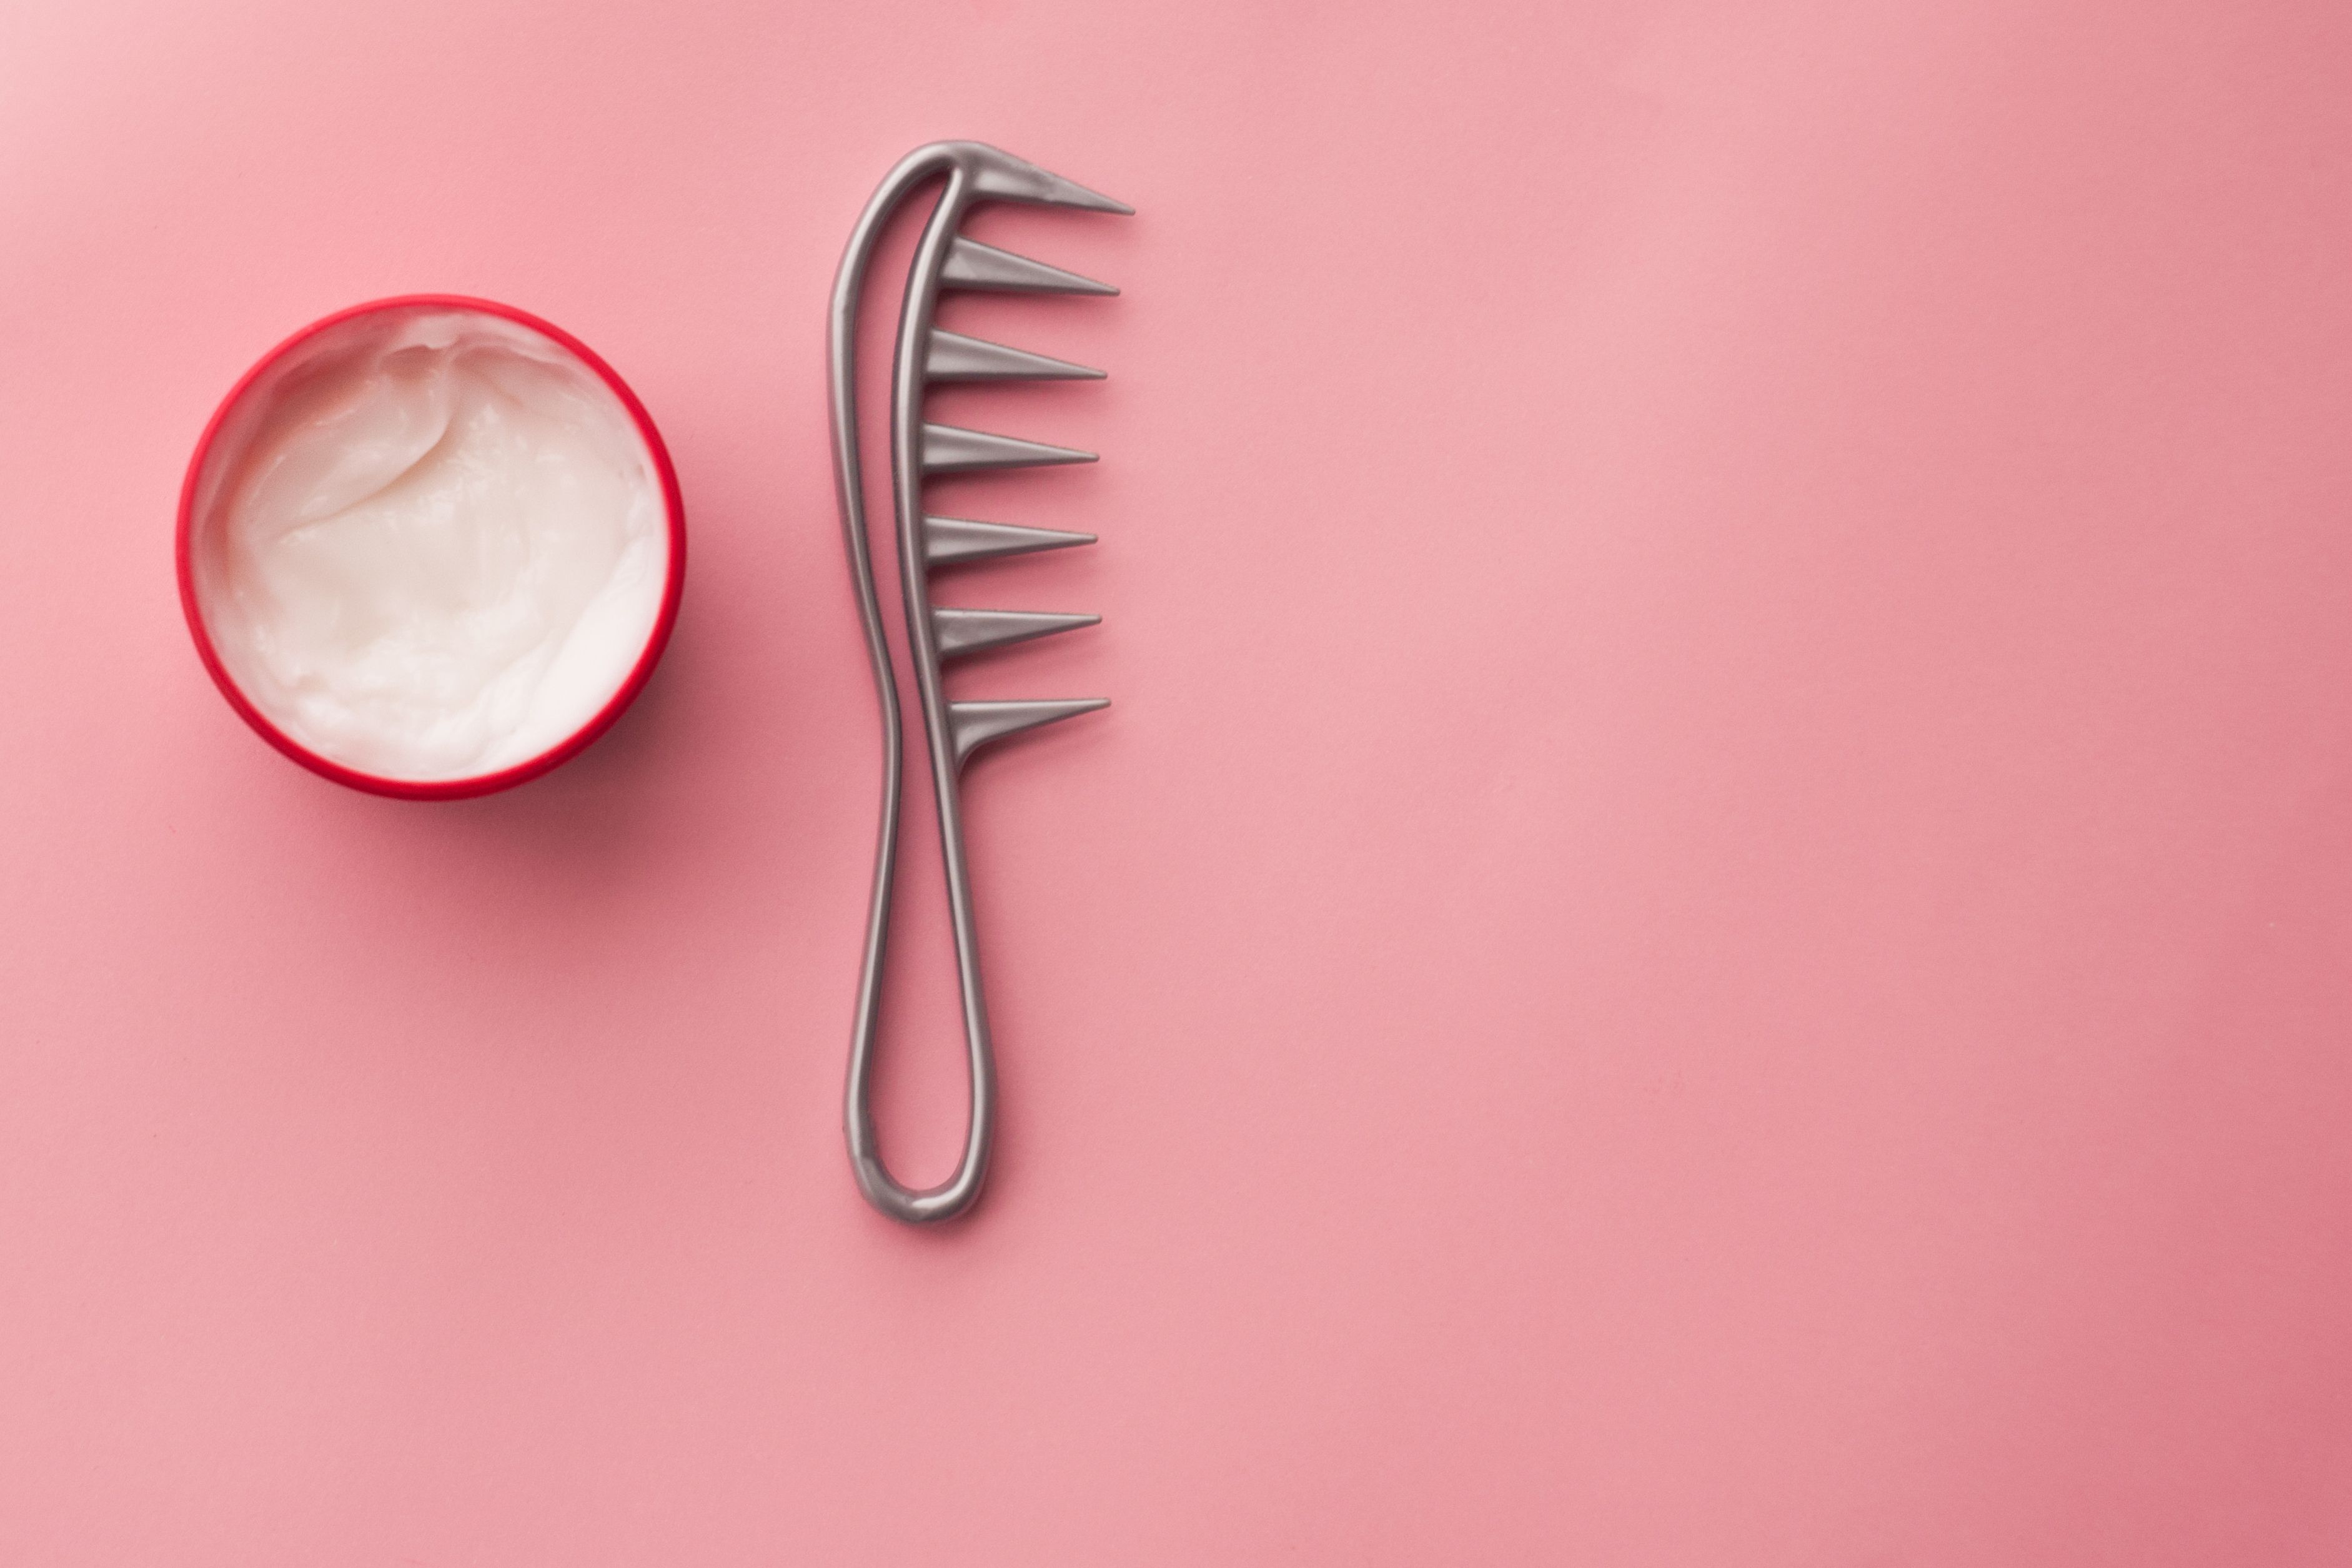 13 Best Homemade Hair Treatments - DIY Home Remedies for Healthy Hair